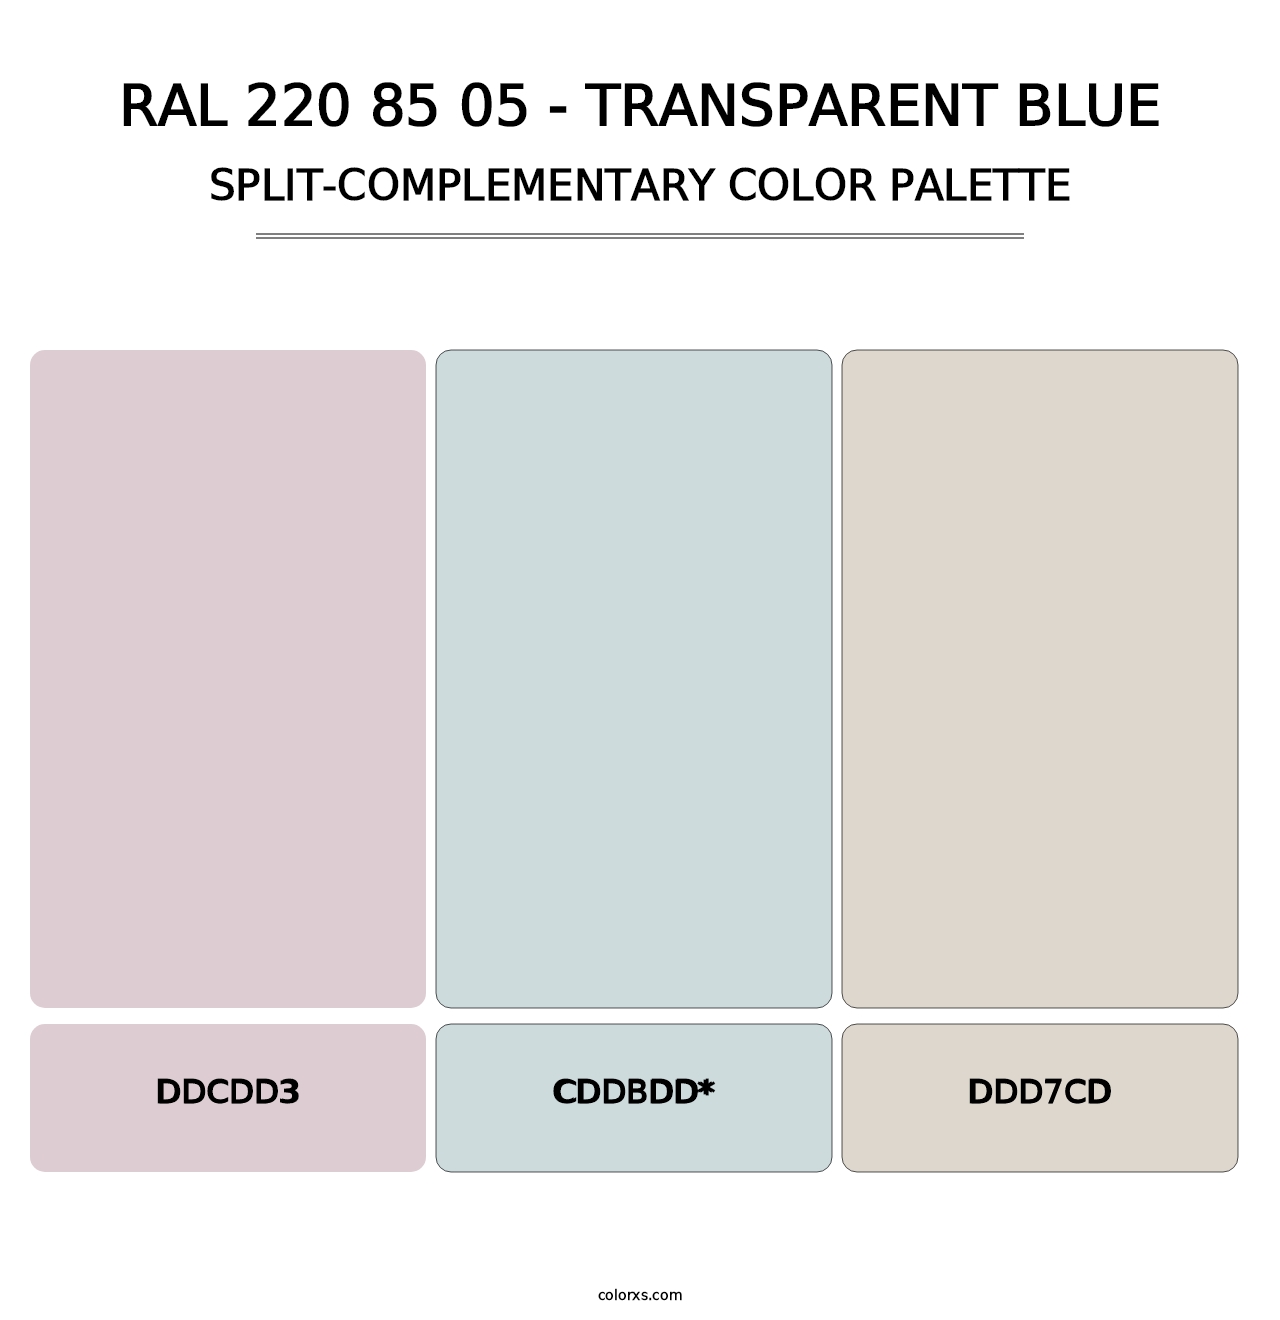 RAL 220 85 05 - Transparent Blue - Split-Complementary Color Palette